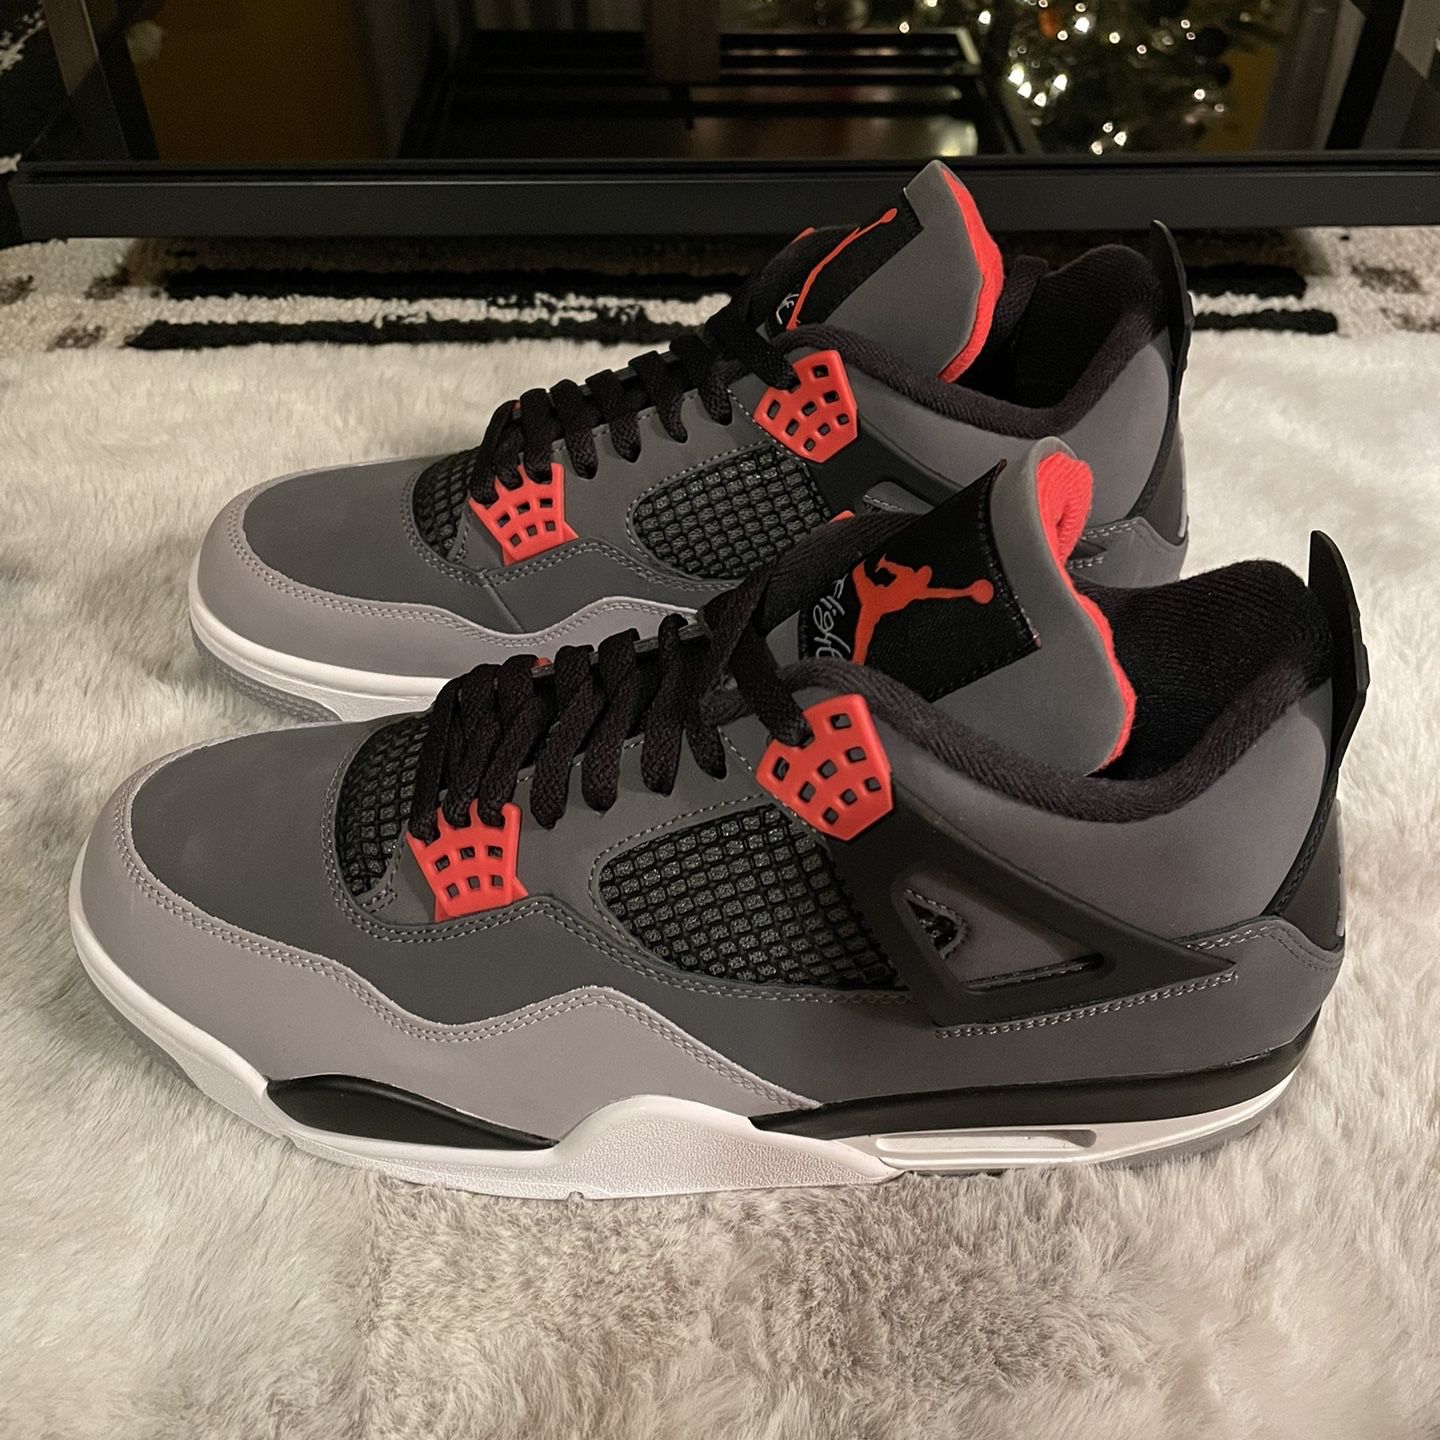 Jordan 4 Retro (Infrared)